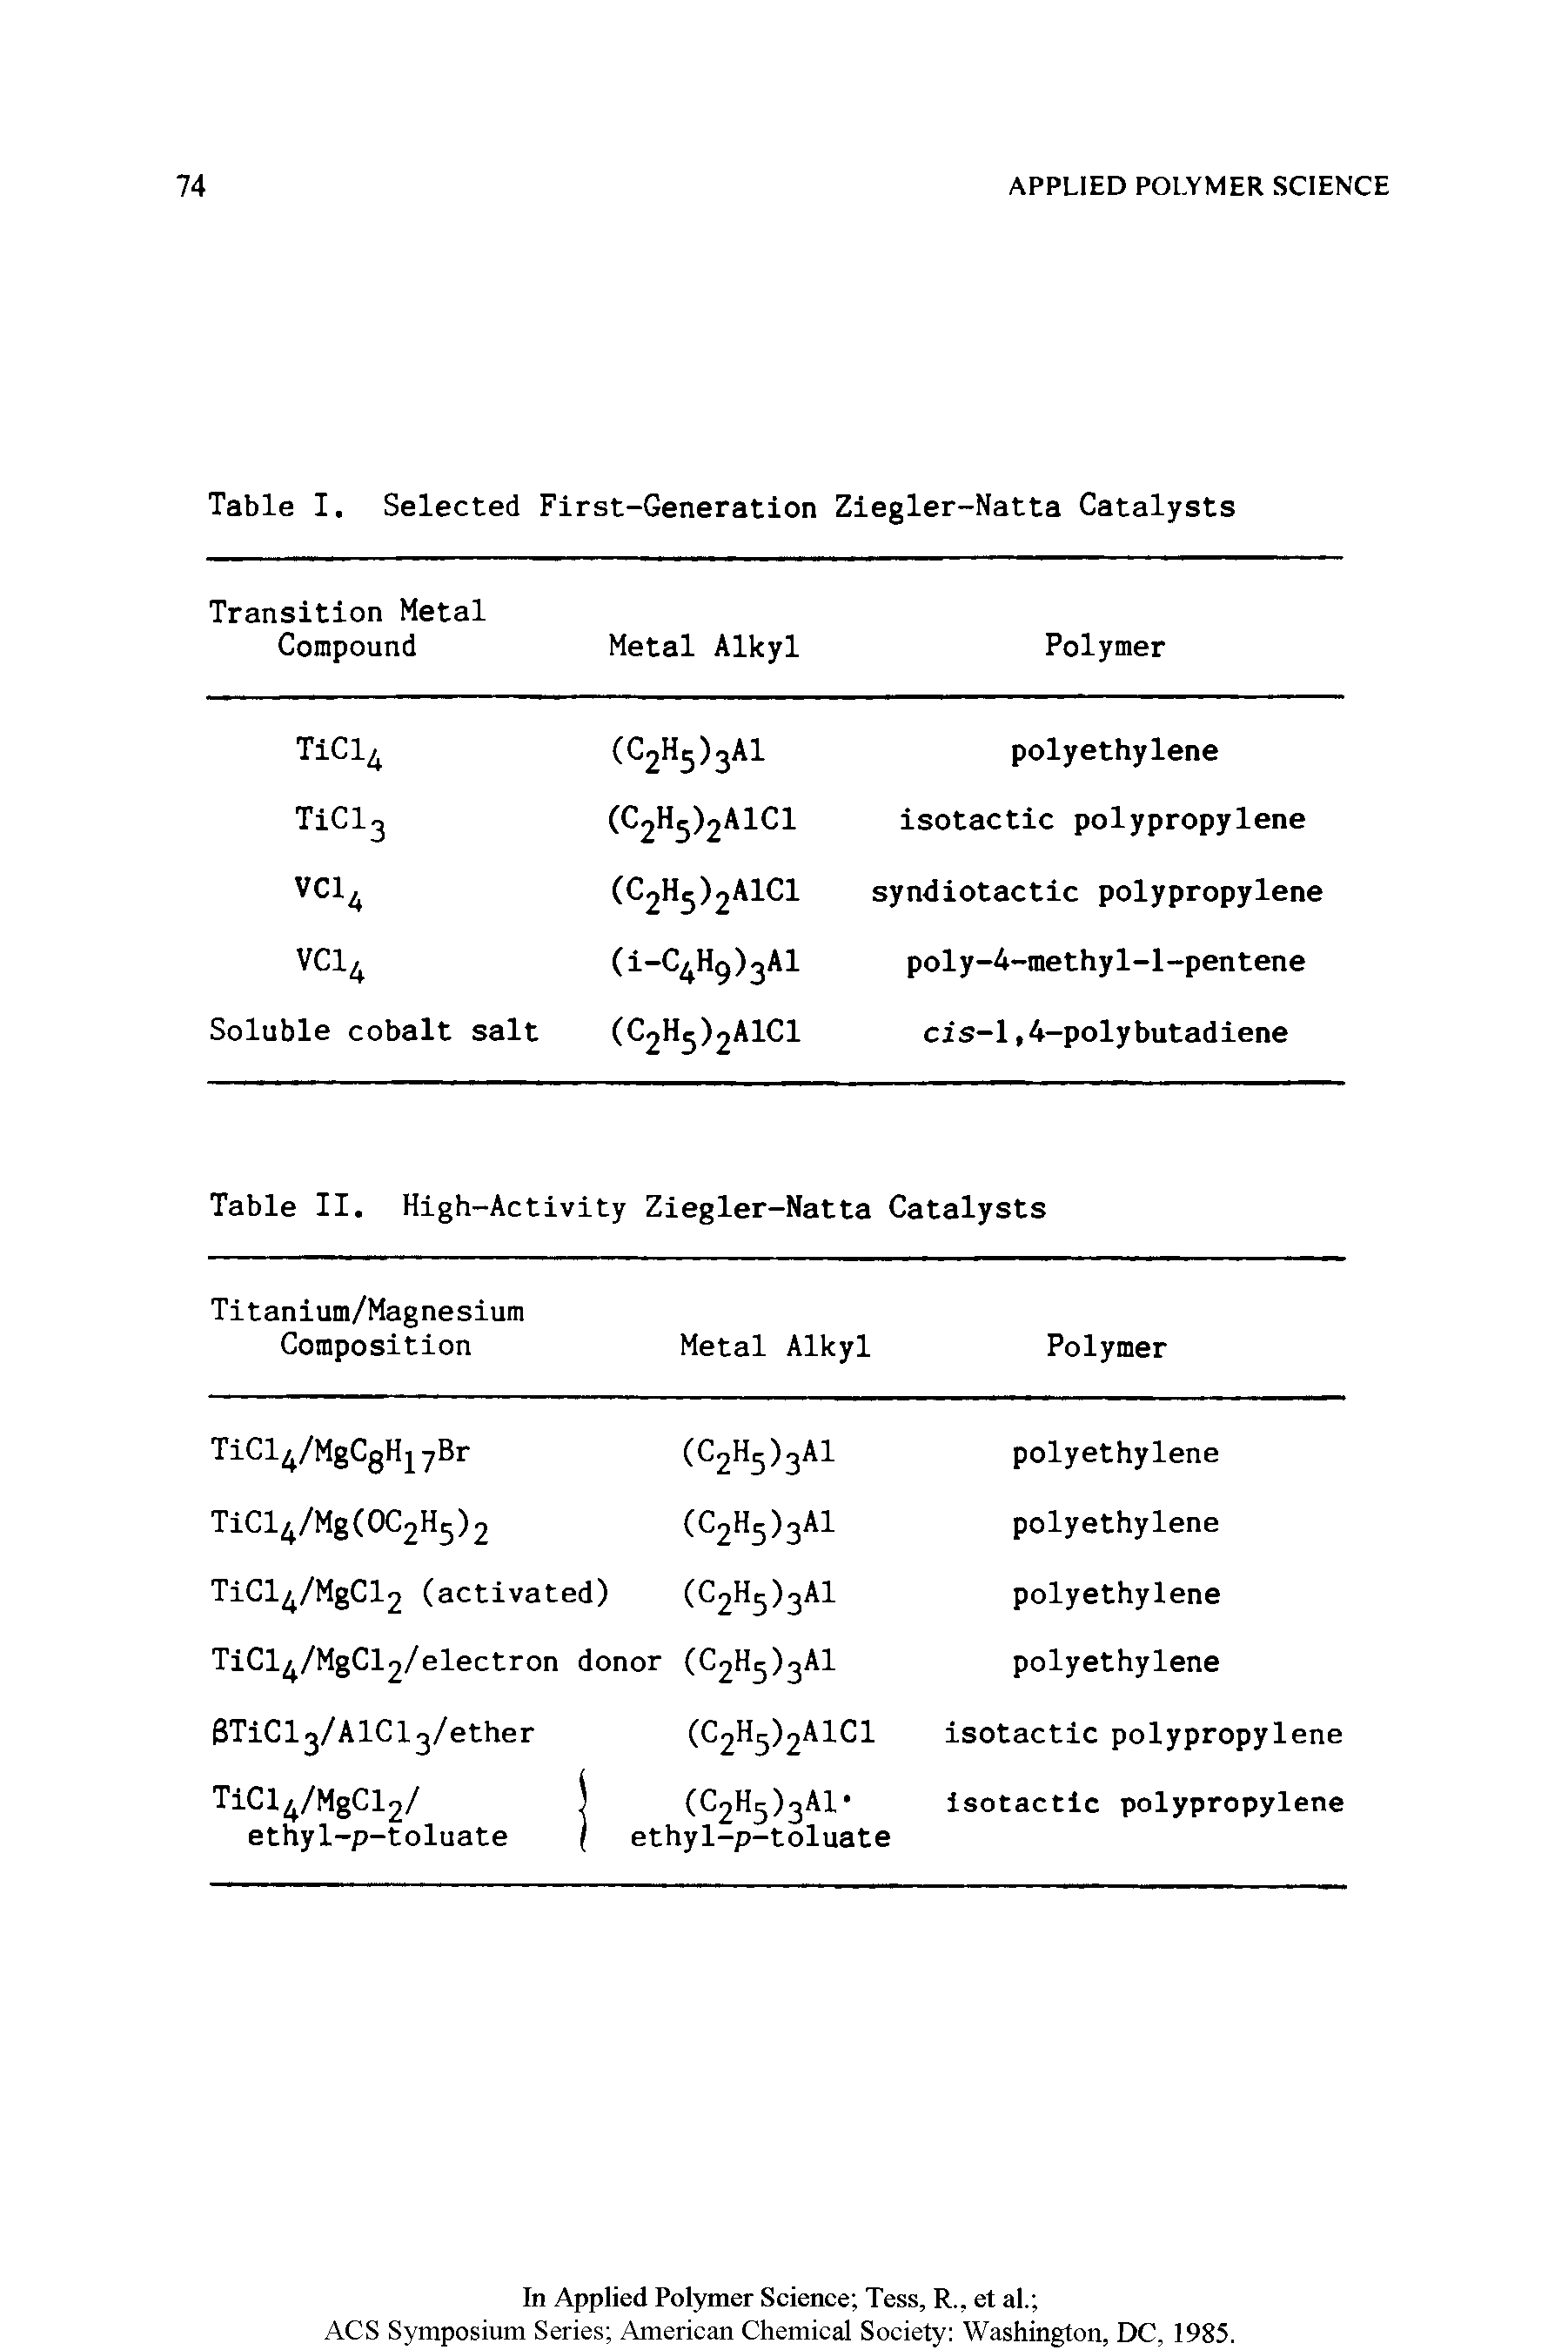 Table I. Selected First-Generation Ziegler-Natta Catalysts...